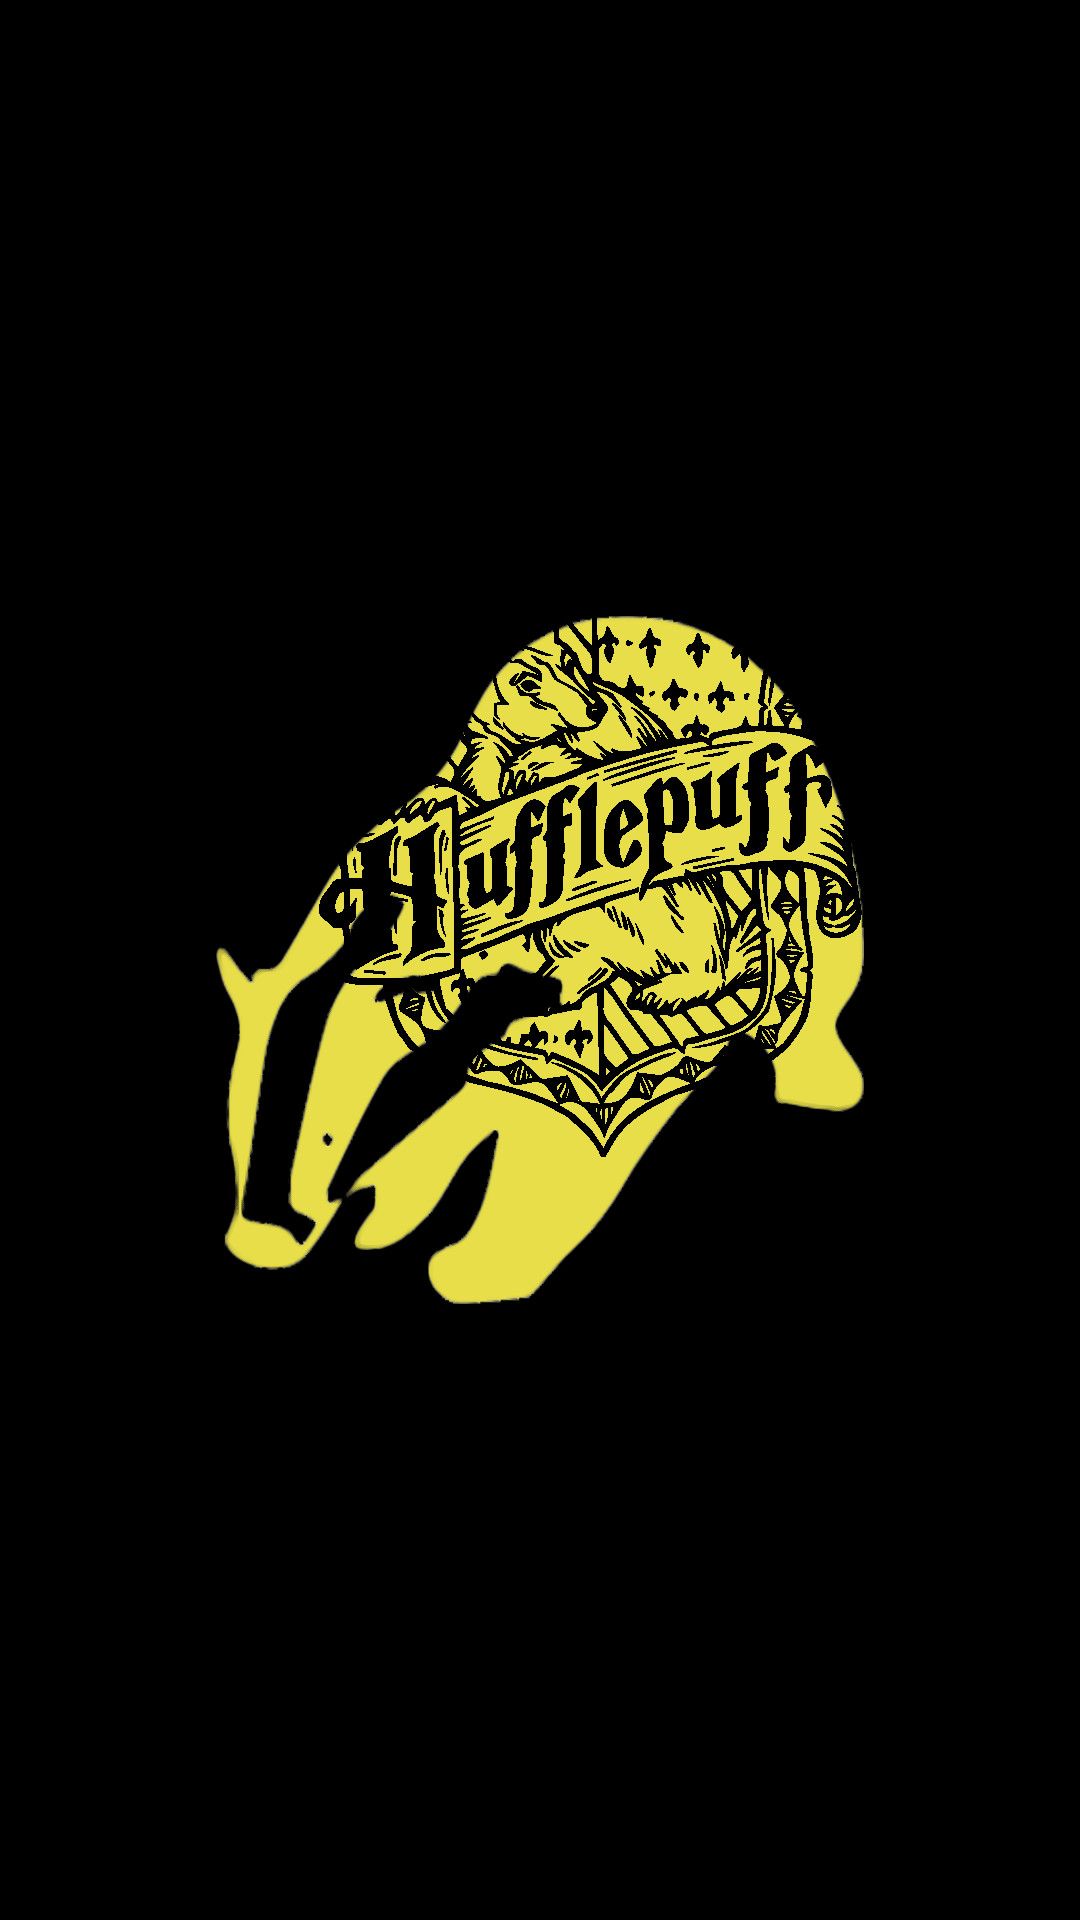 Iphone wallpaper harry potter hogwarts hufflepuff - Hufflepuff